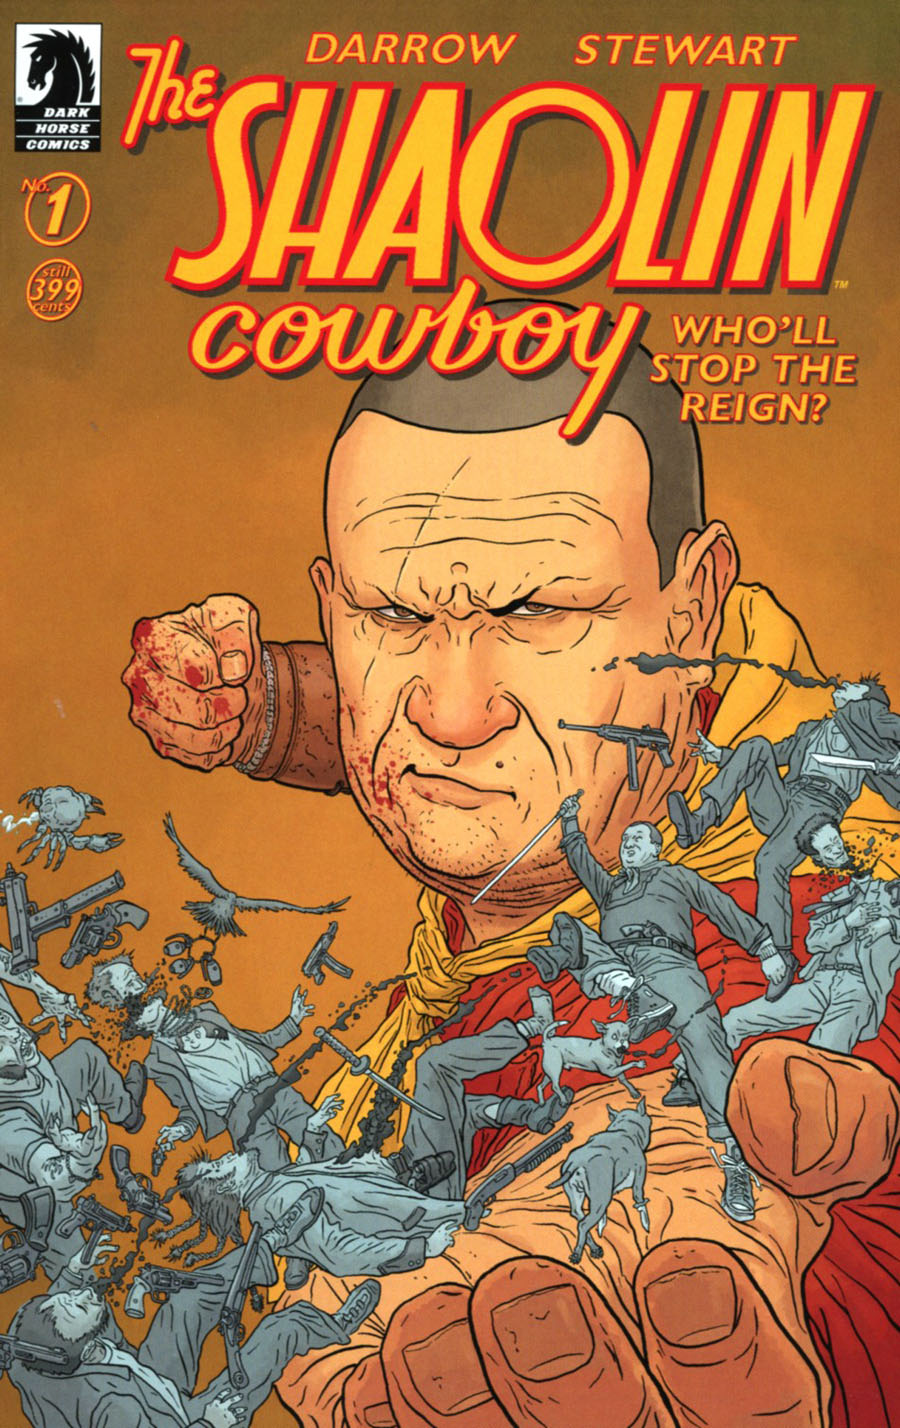 Shaolin Cowboy Wholl Stop The Reign #1 Cover A Regular Geof Darrow Cover